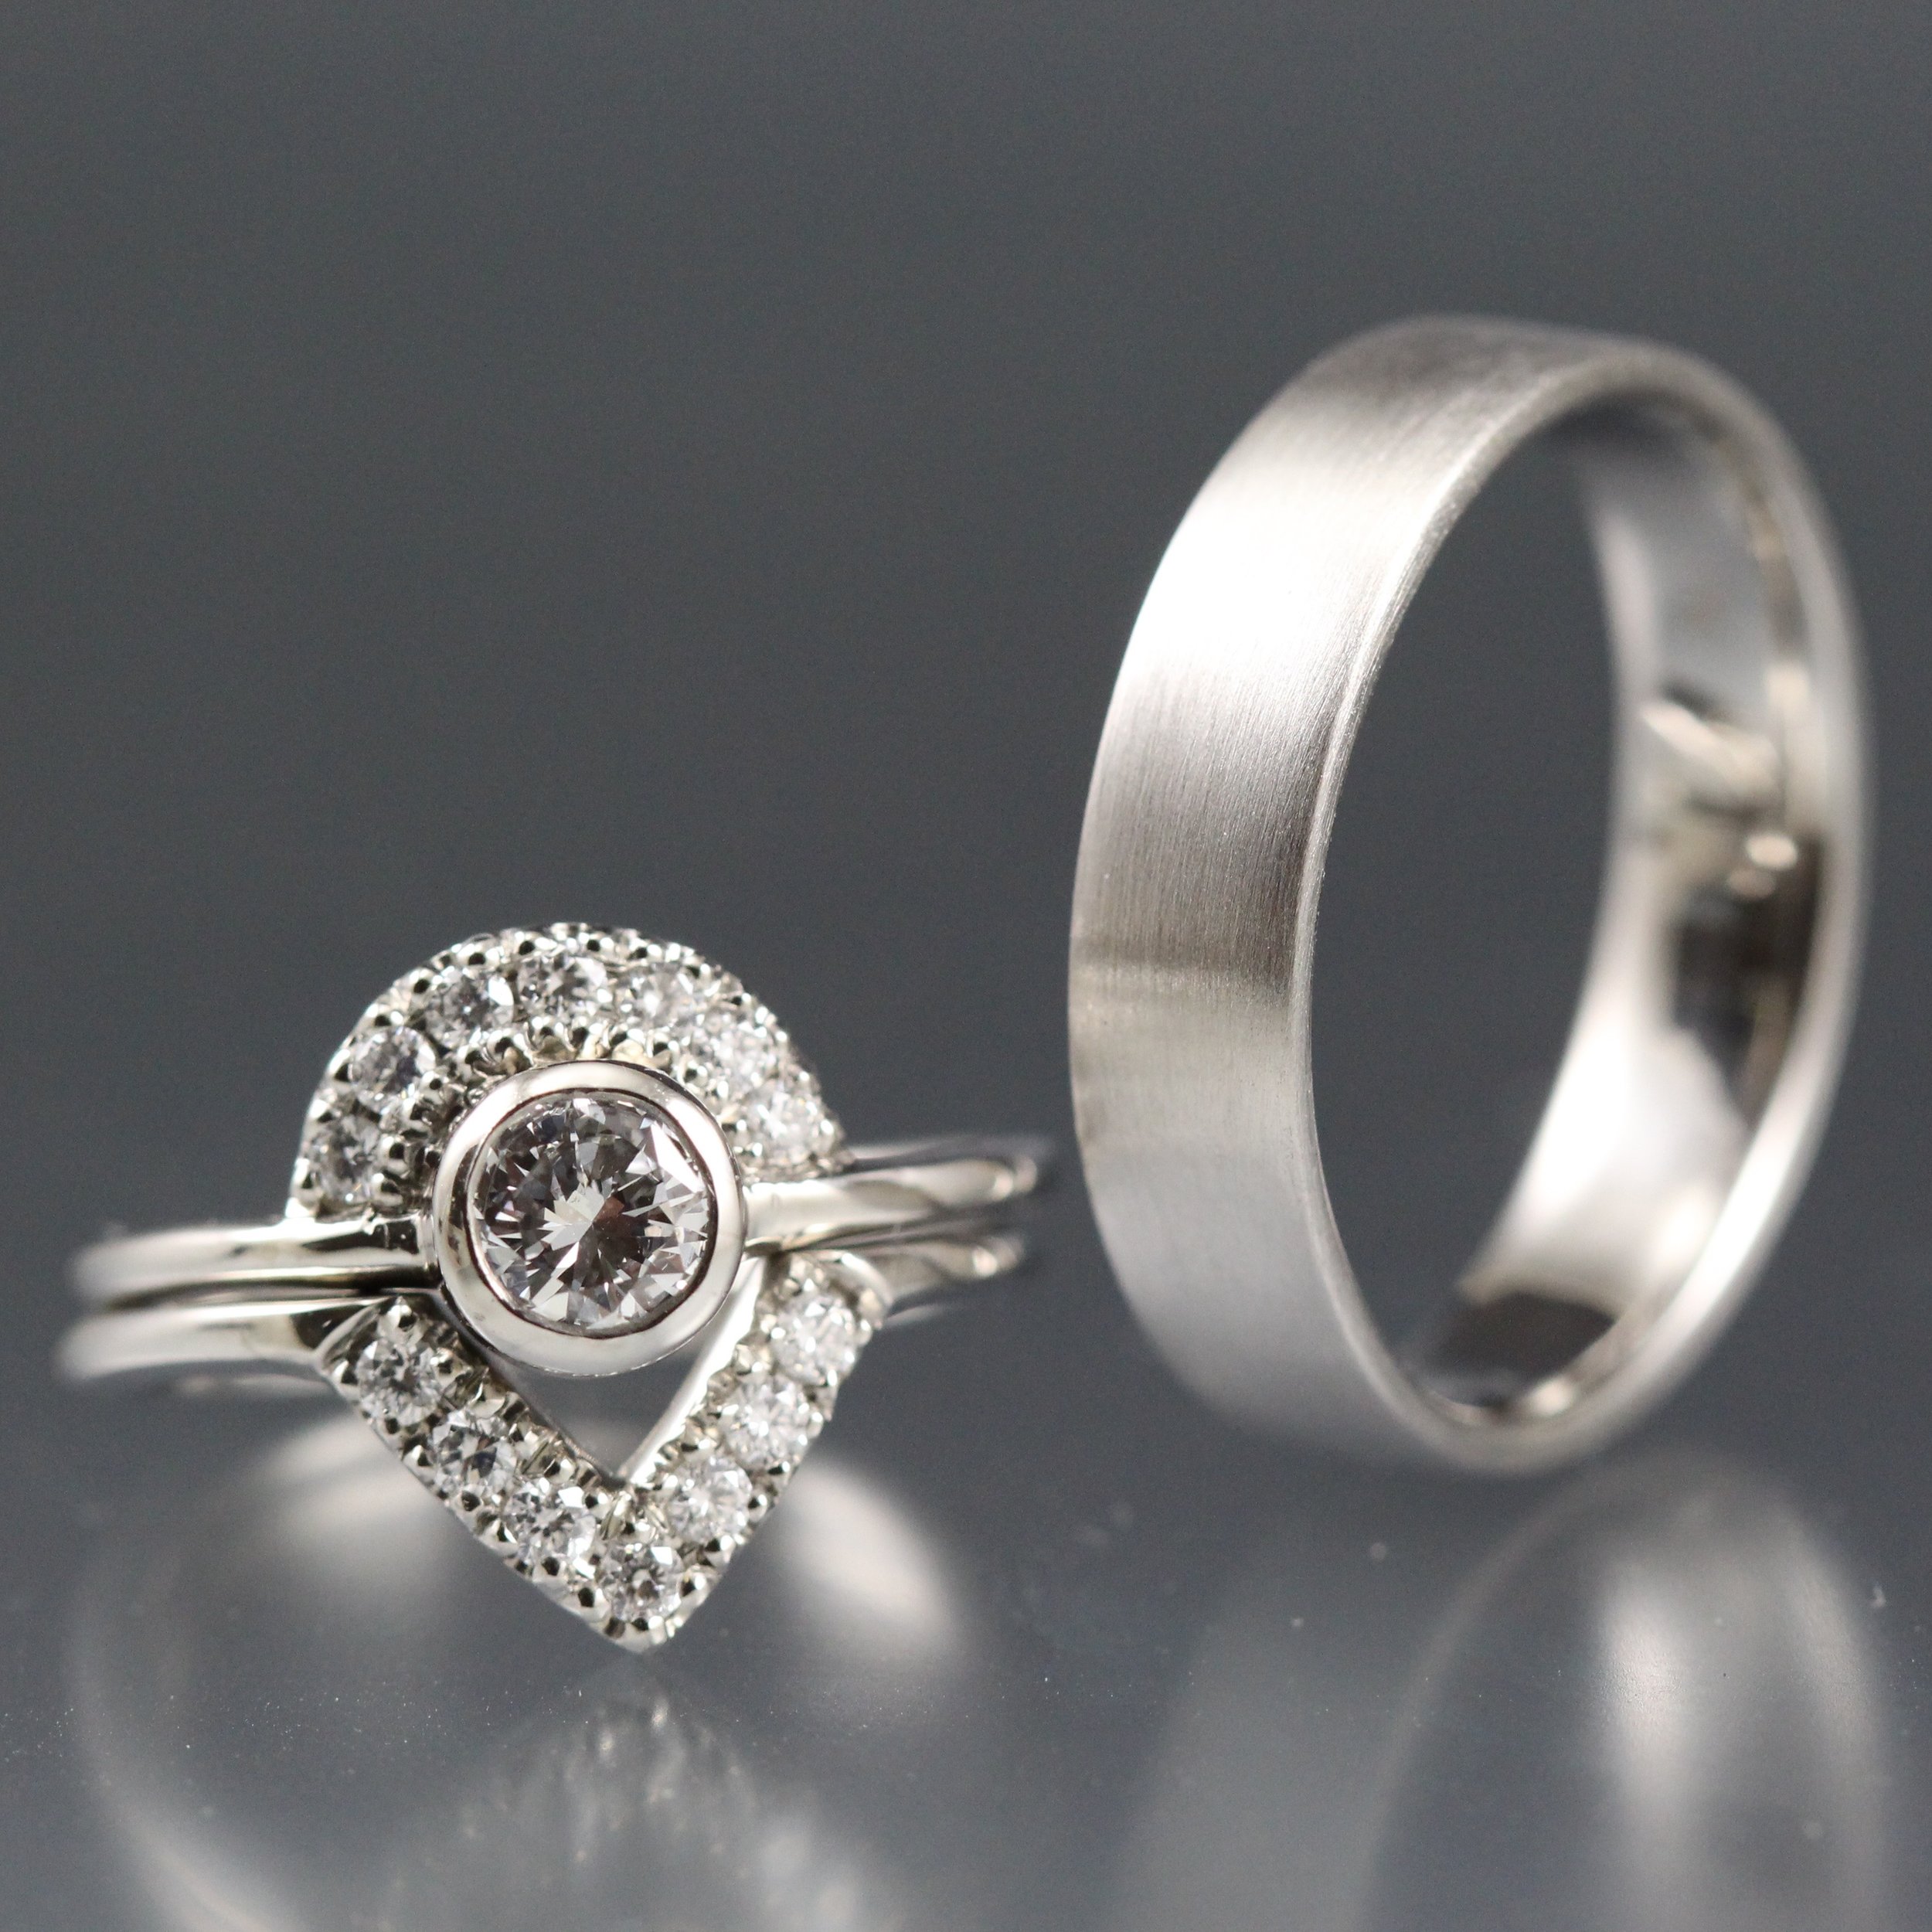 Palladium wedding ring set